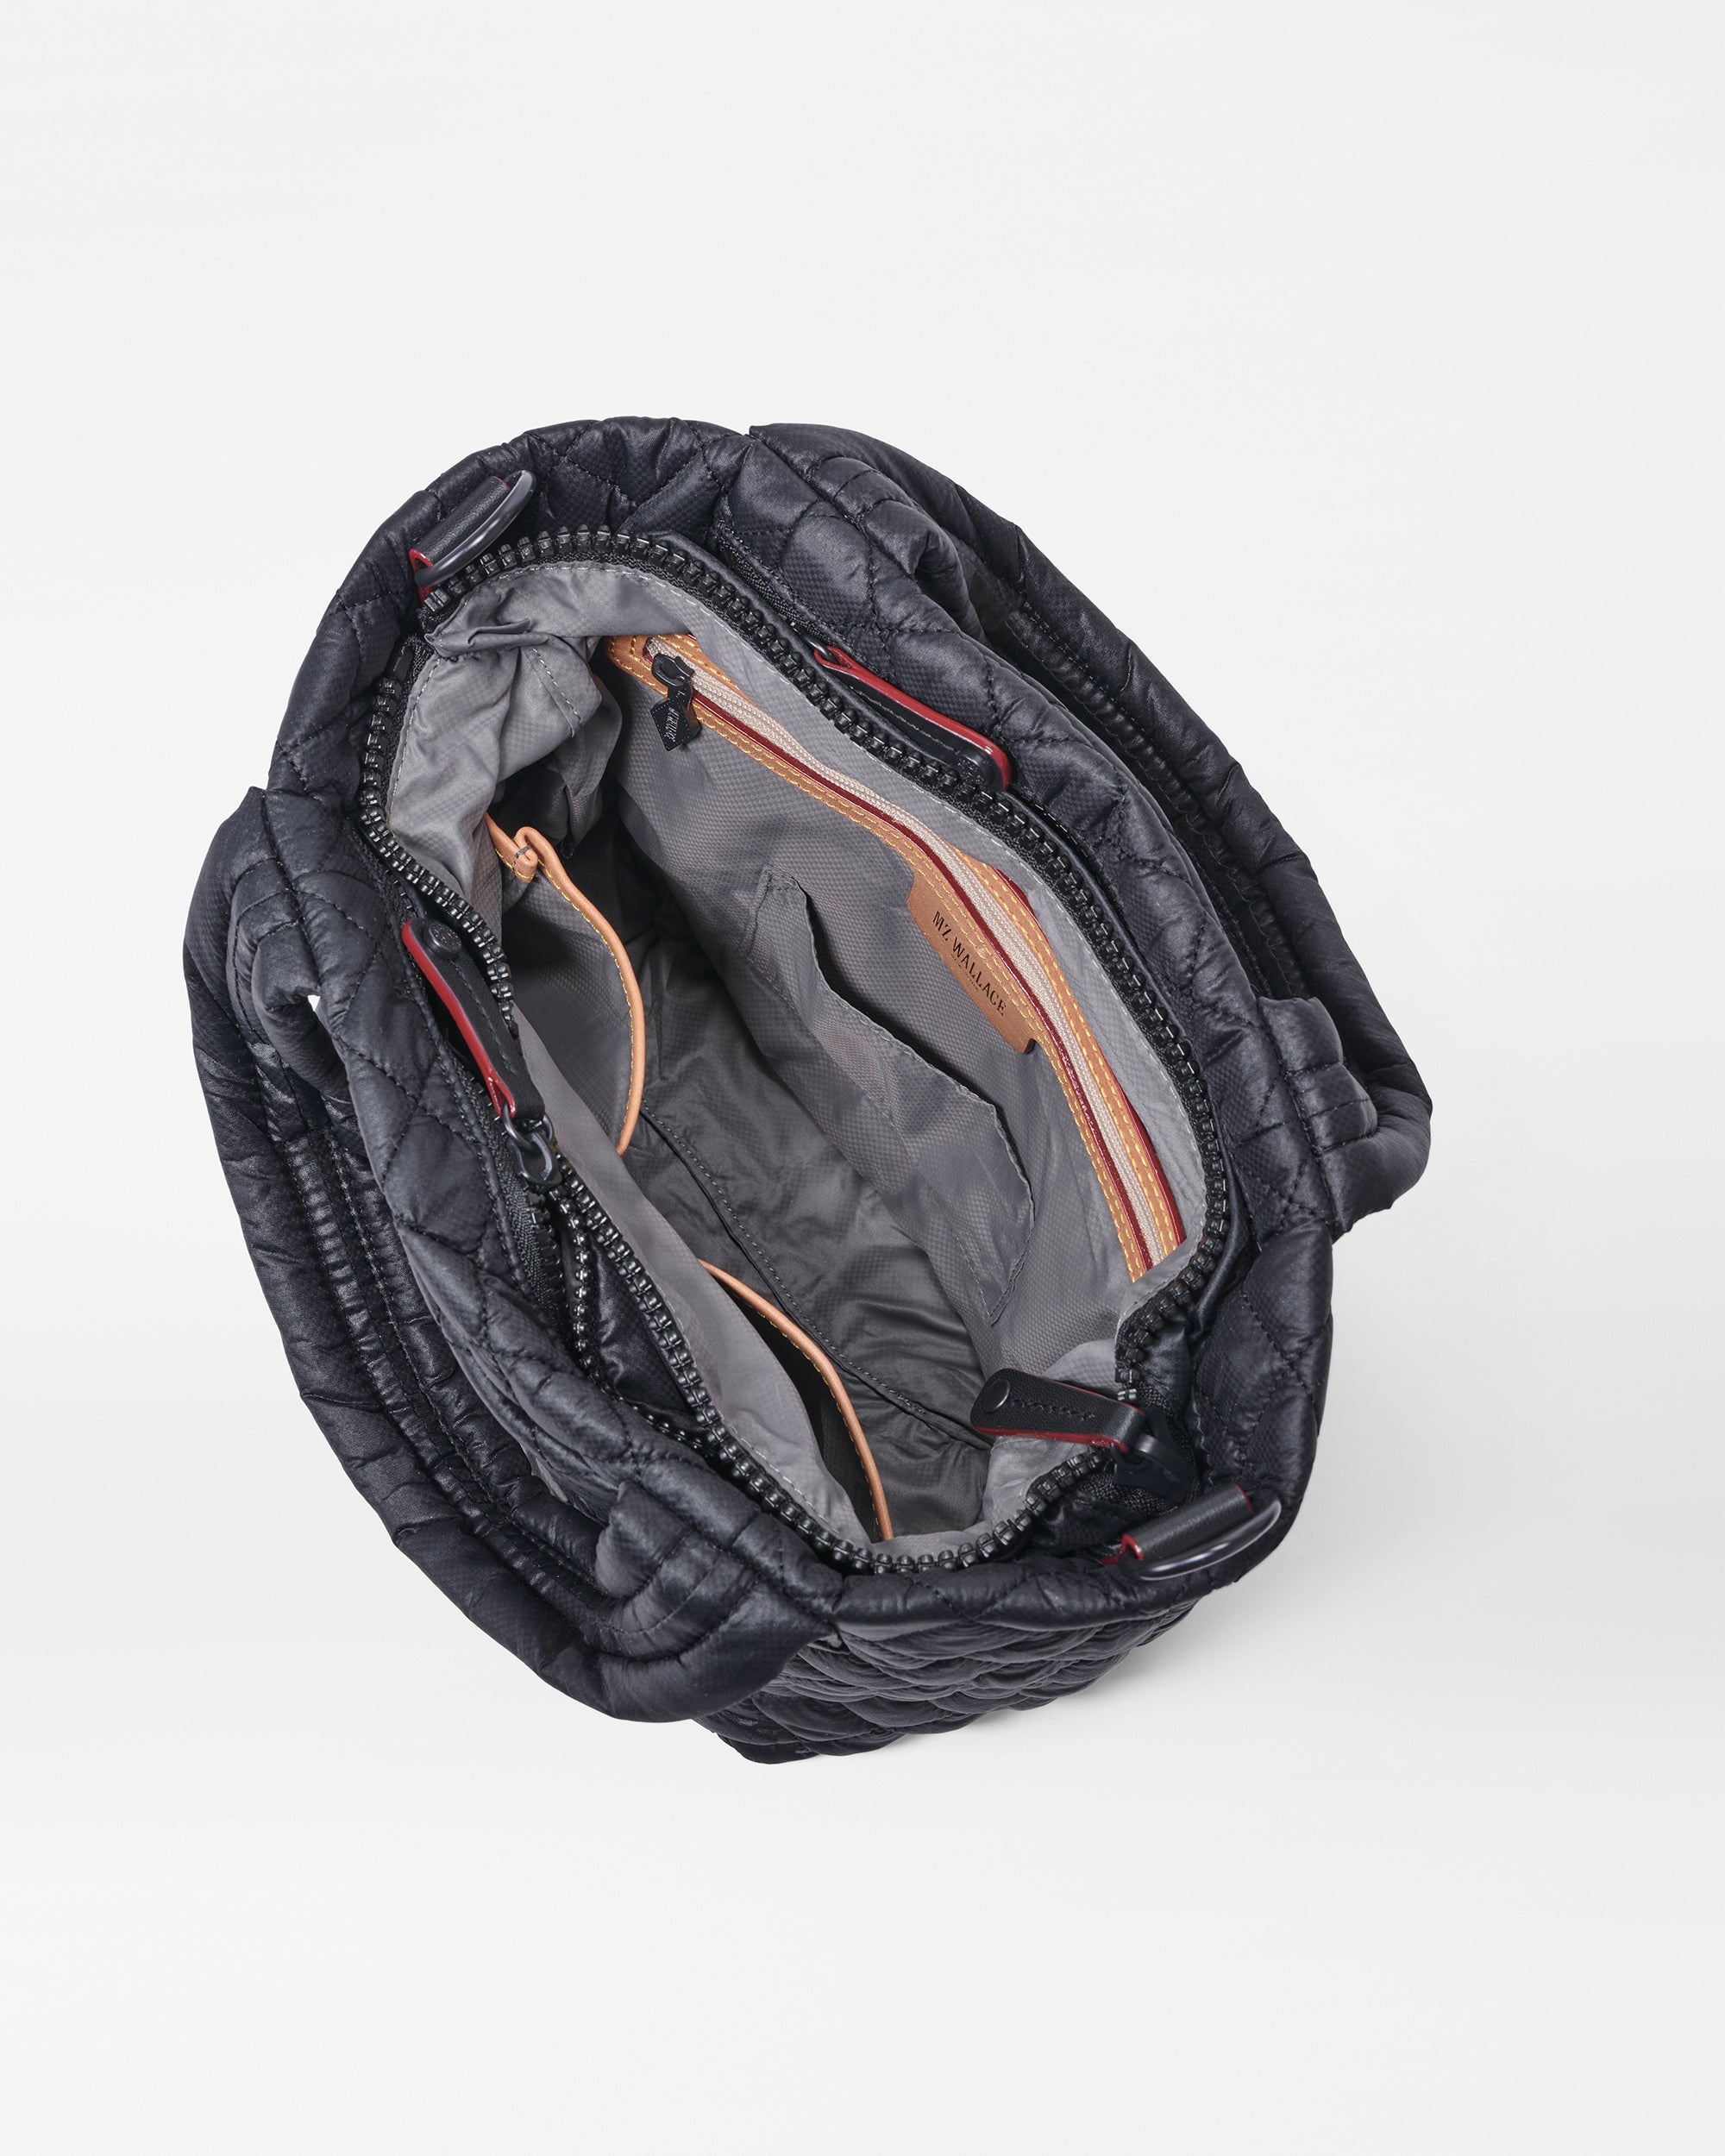 Mini Metro Tote Deluxe Quilted Handbag in Black